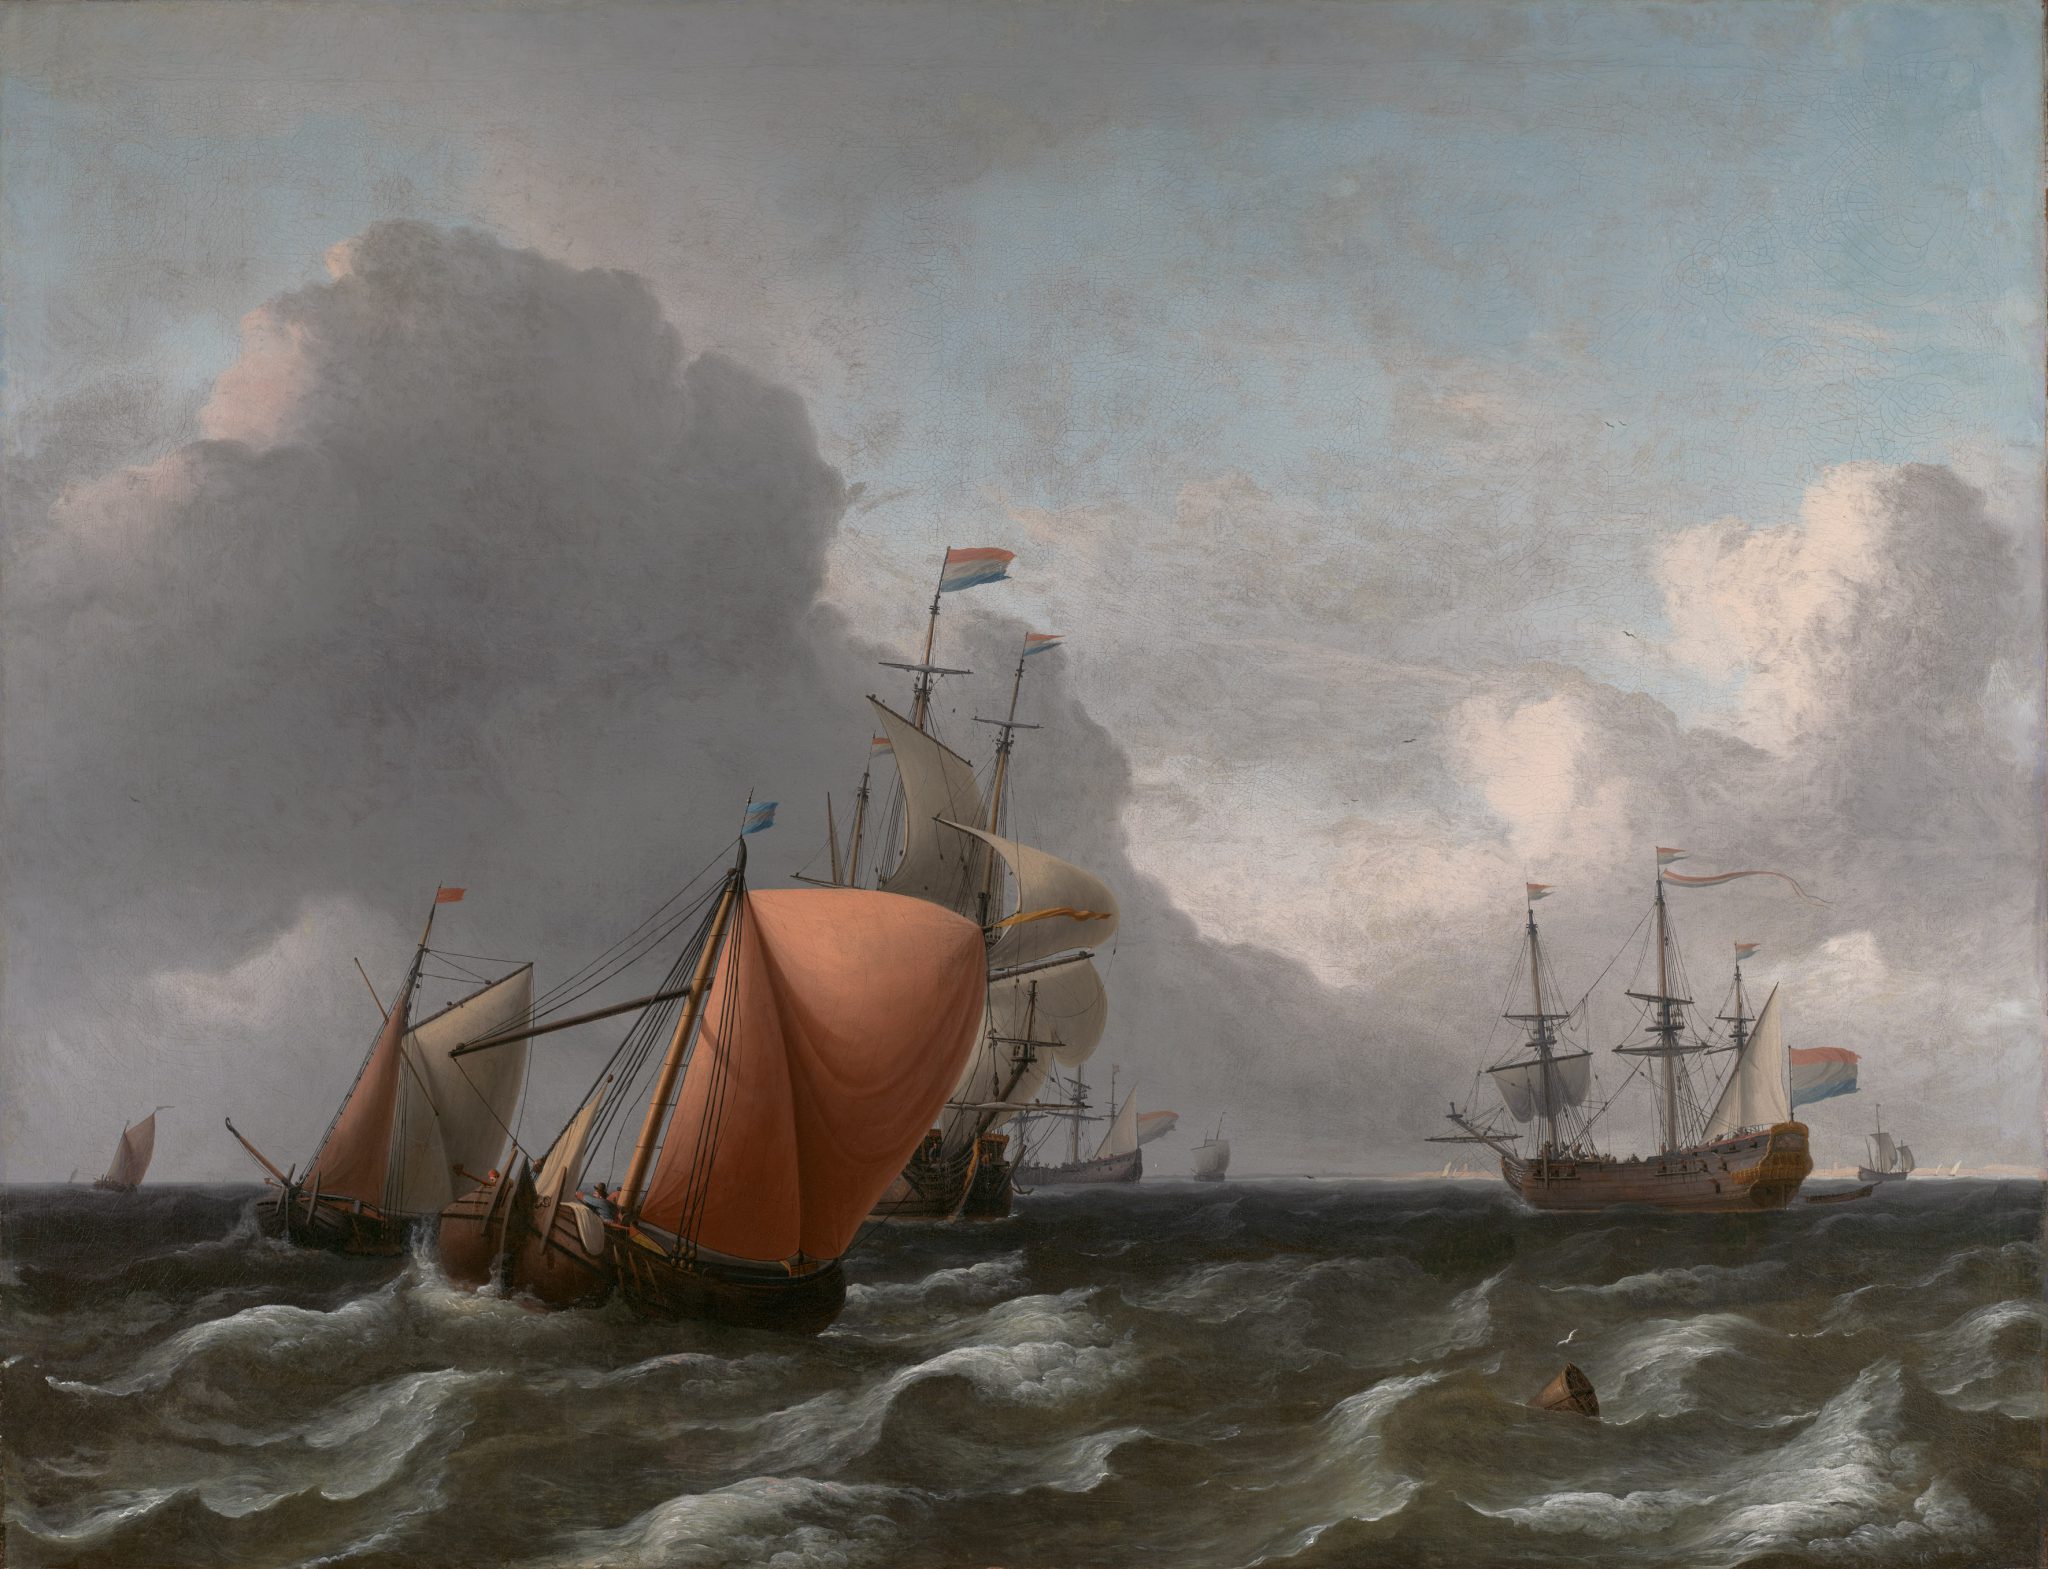 Dutch ships on choppy waters